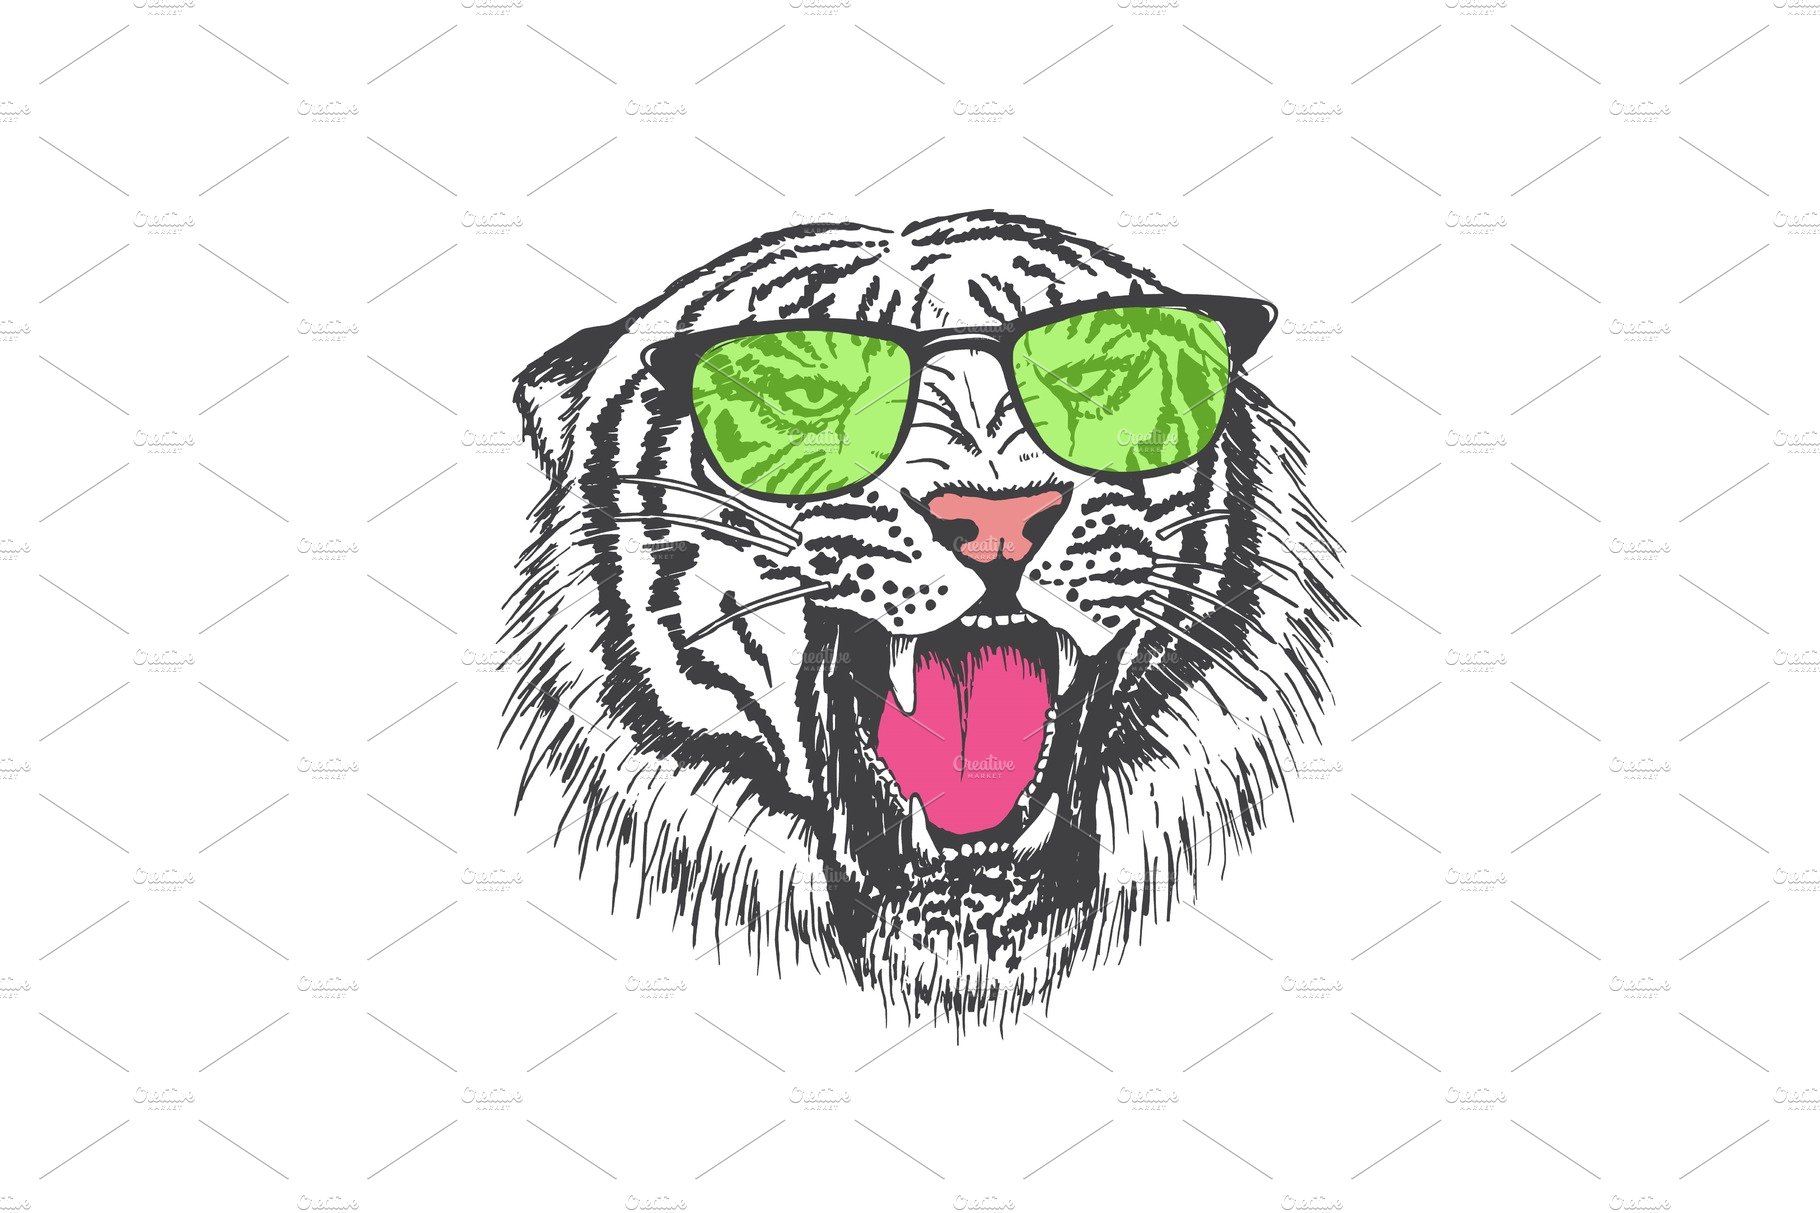 tiger in sunglasses cover image.